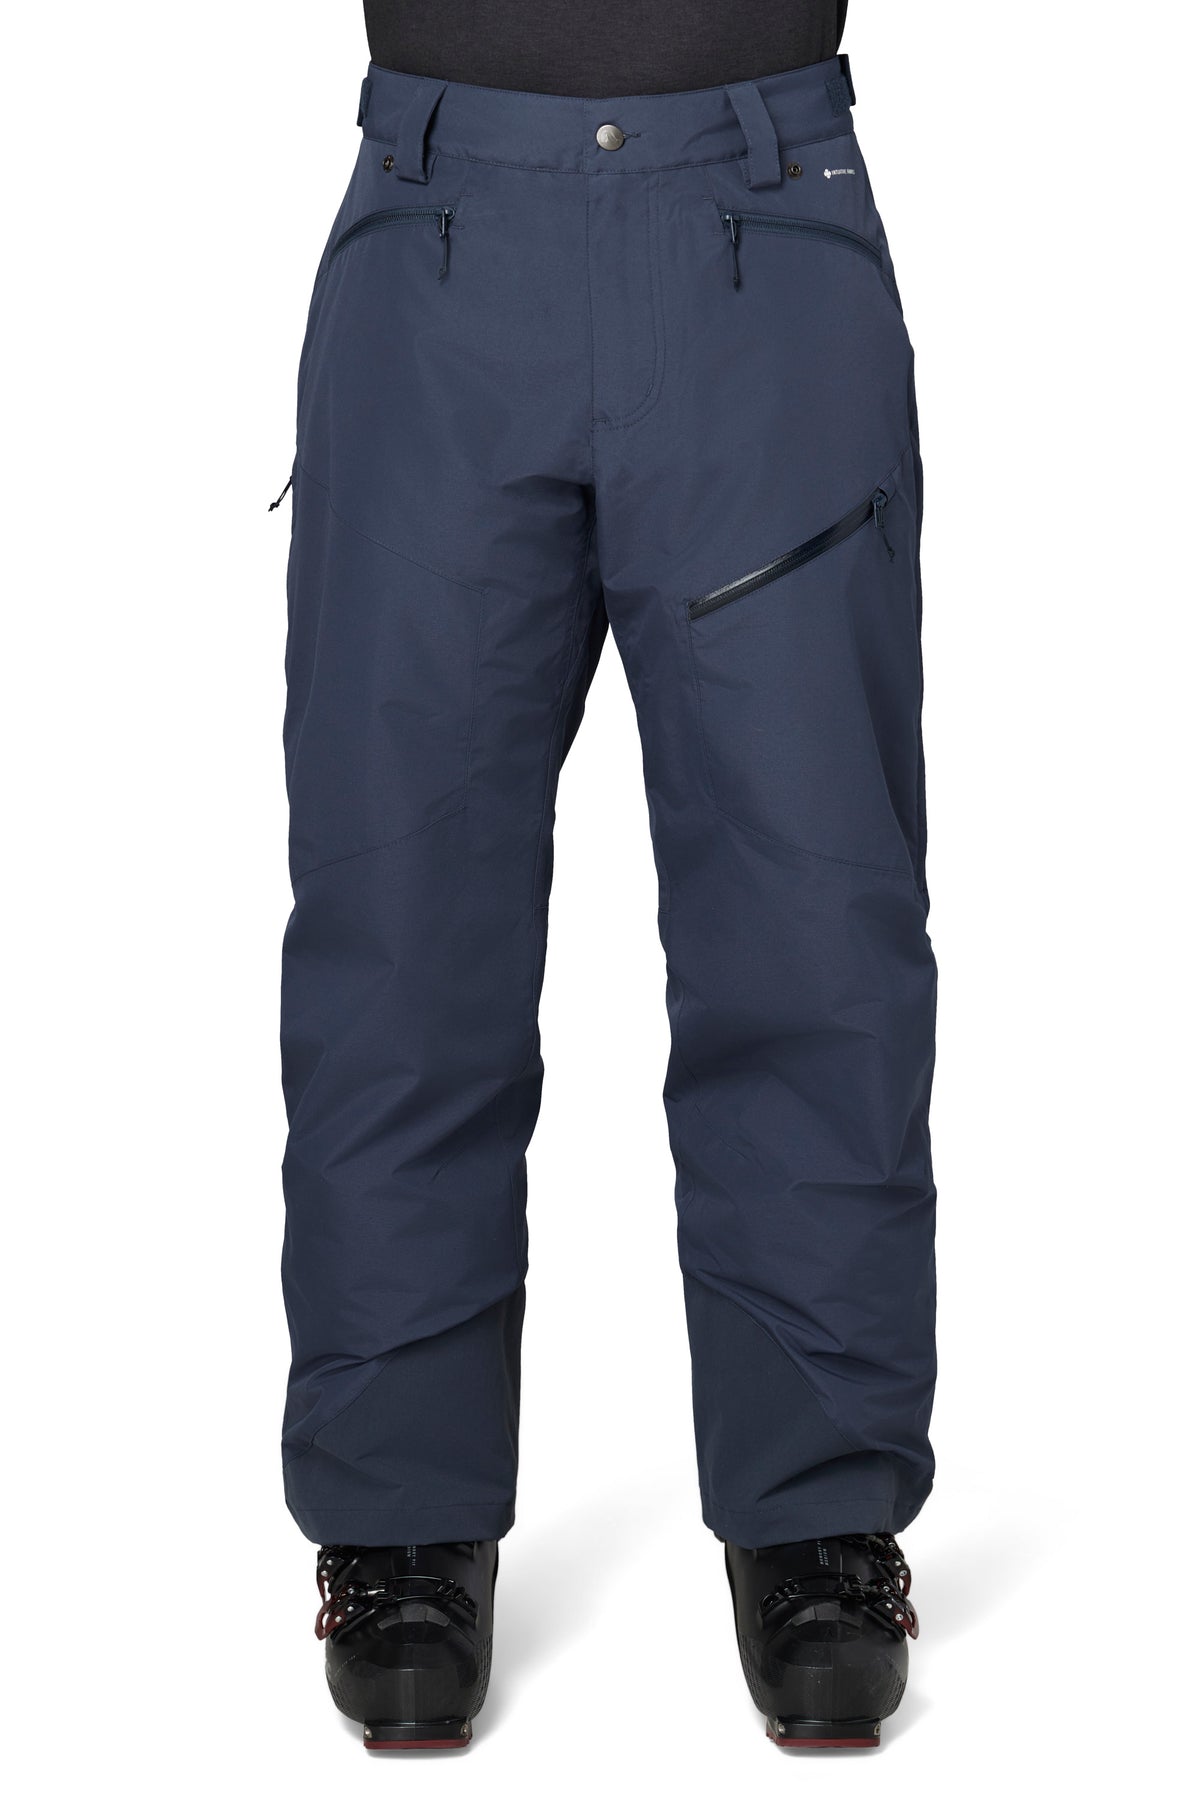 Snowman Pant - Men's Insulated Ski Pants | Flylow – Flylow Gear